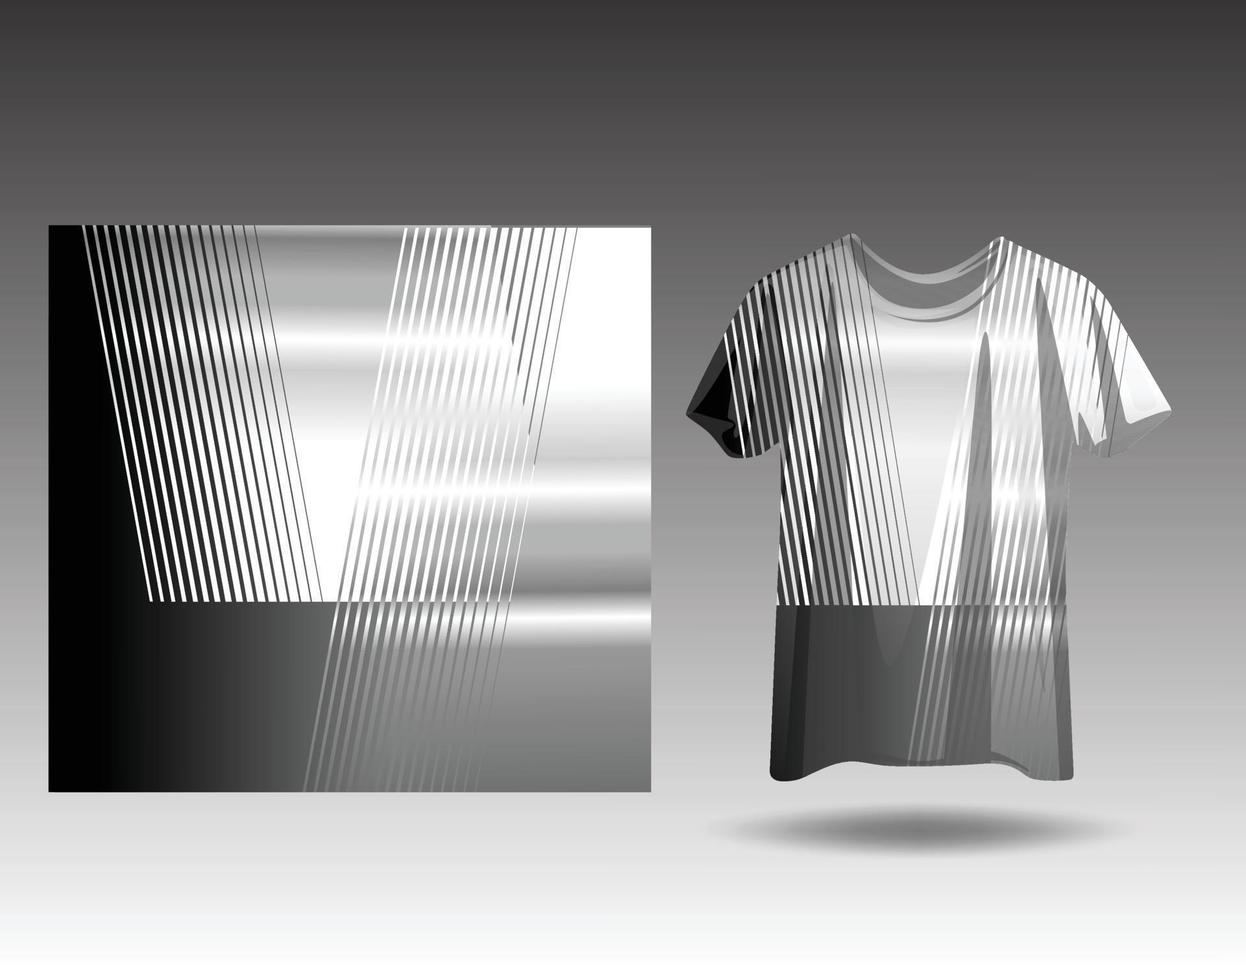 camiseta deporte grunge fondo para extrema jersey equipo carreras ciclismo fútbol juego telón de fondo papel tapiz vector